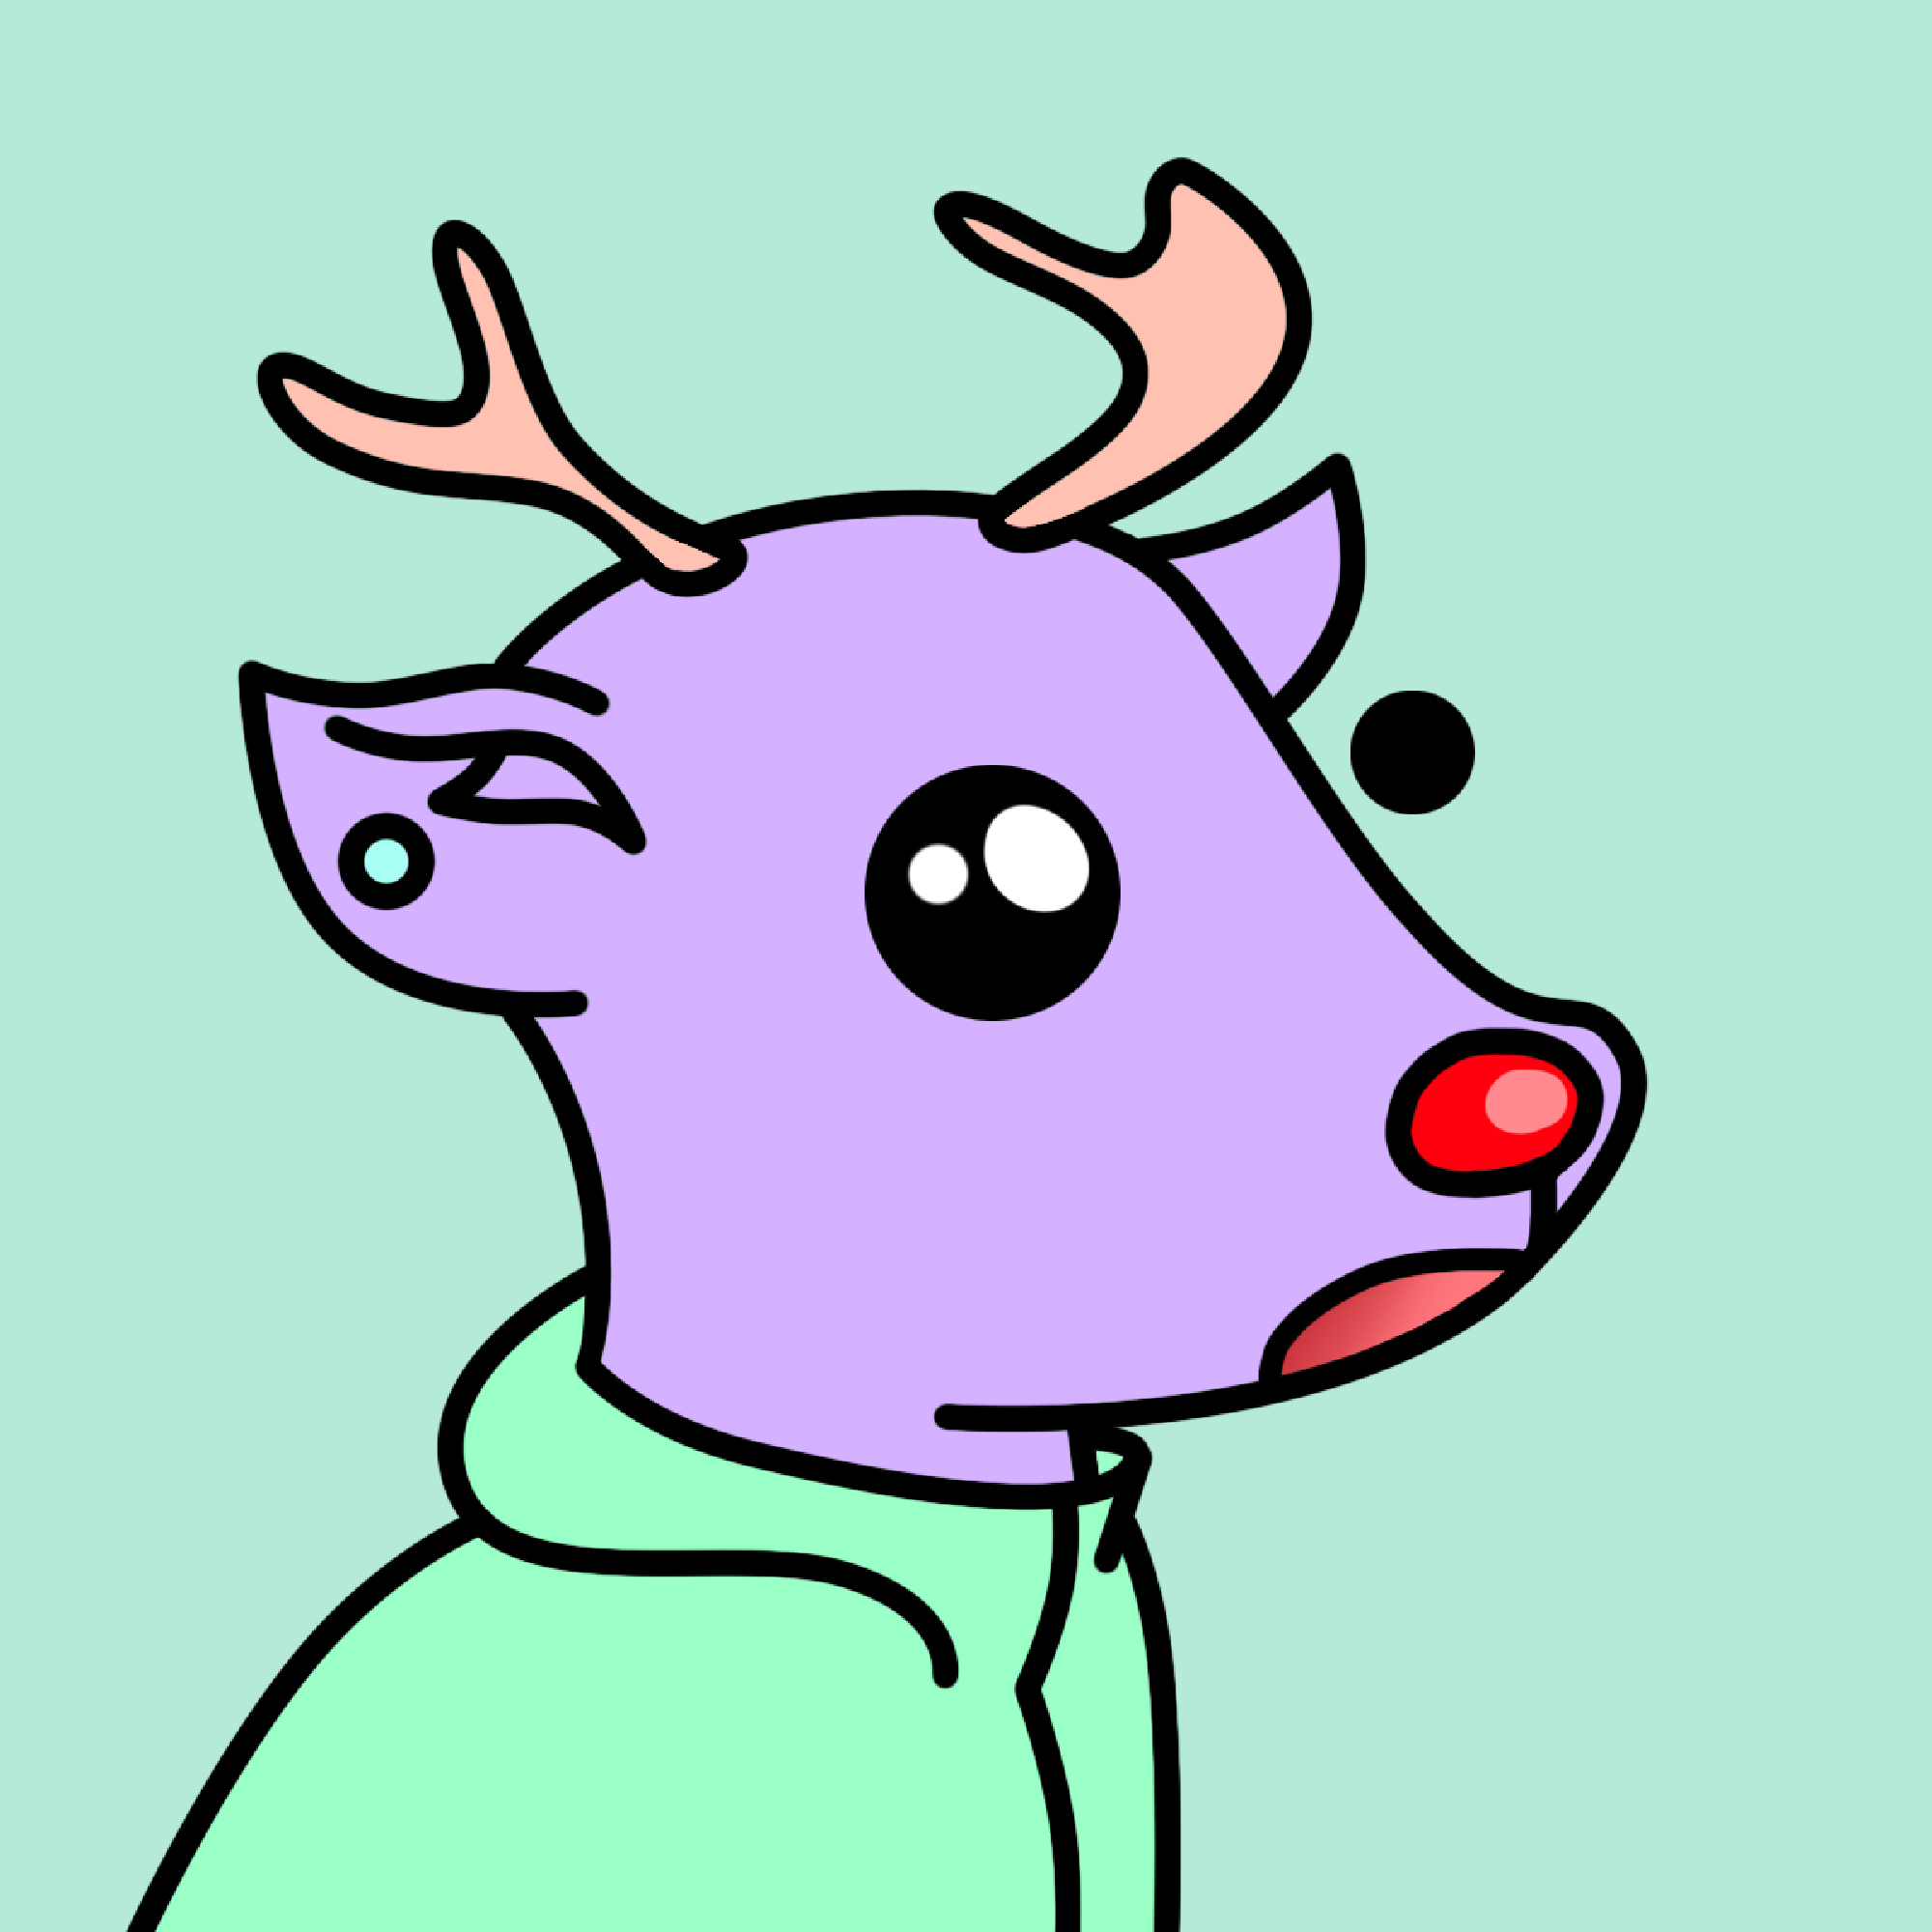 Doodled Deer#4271